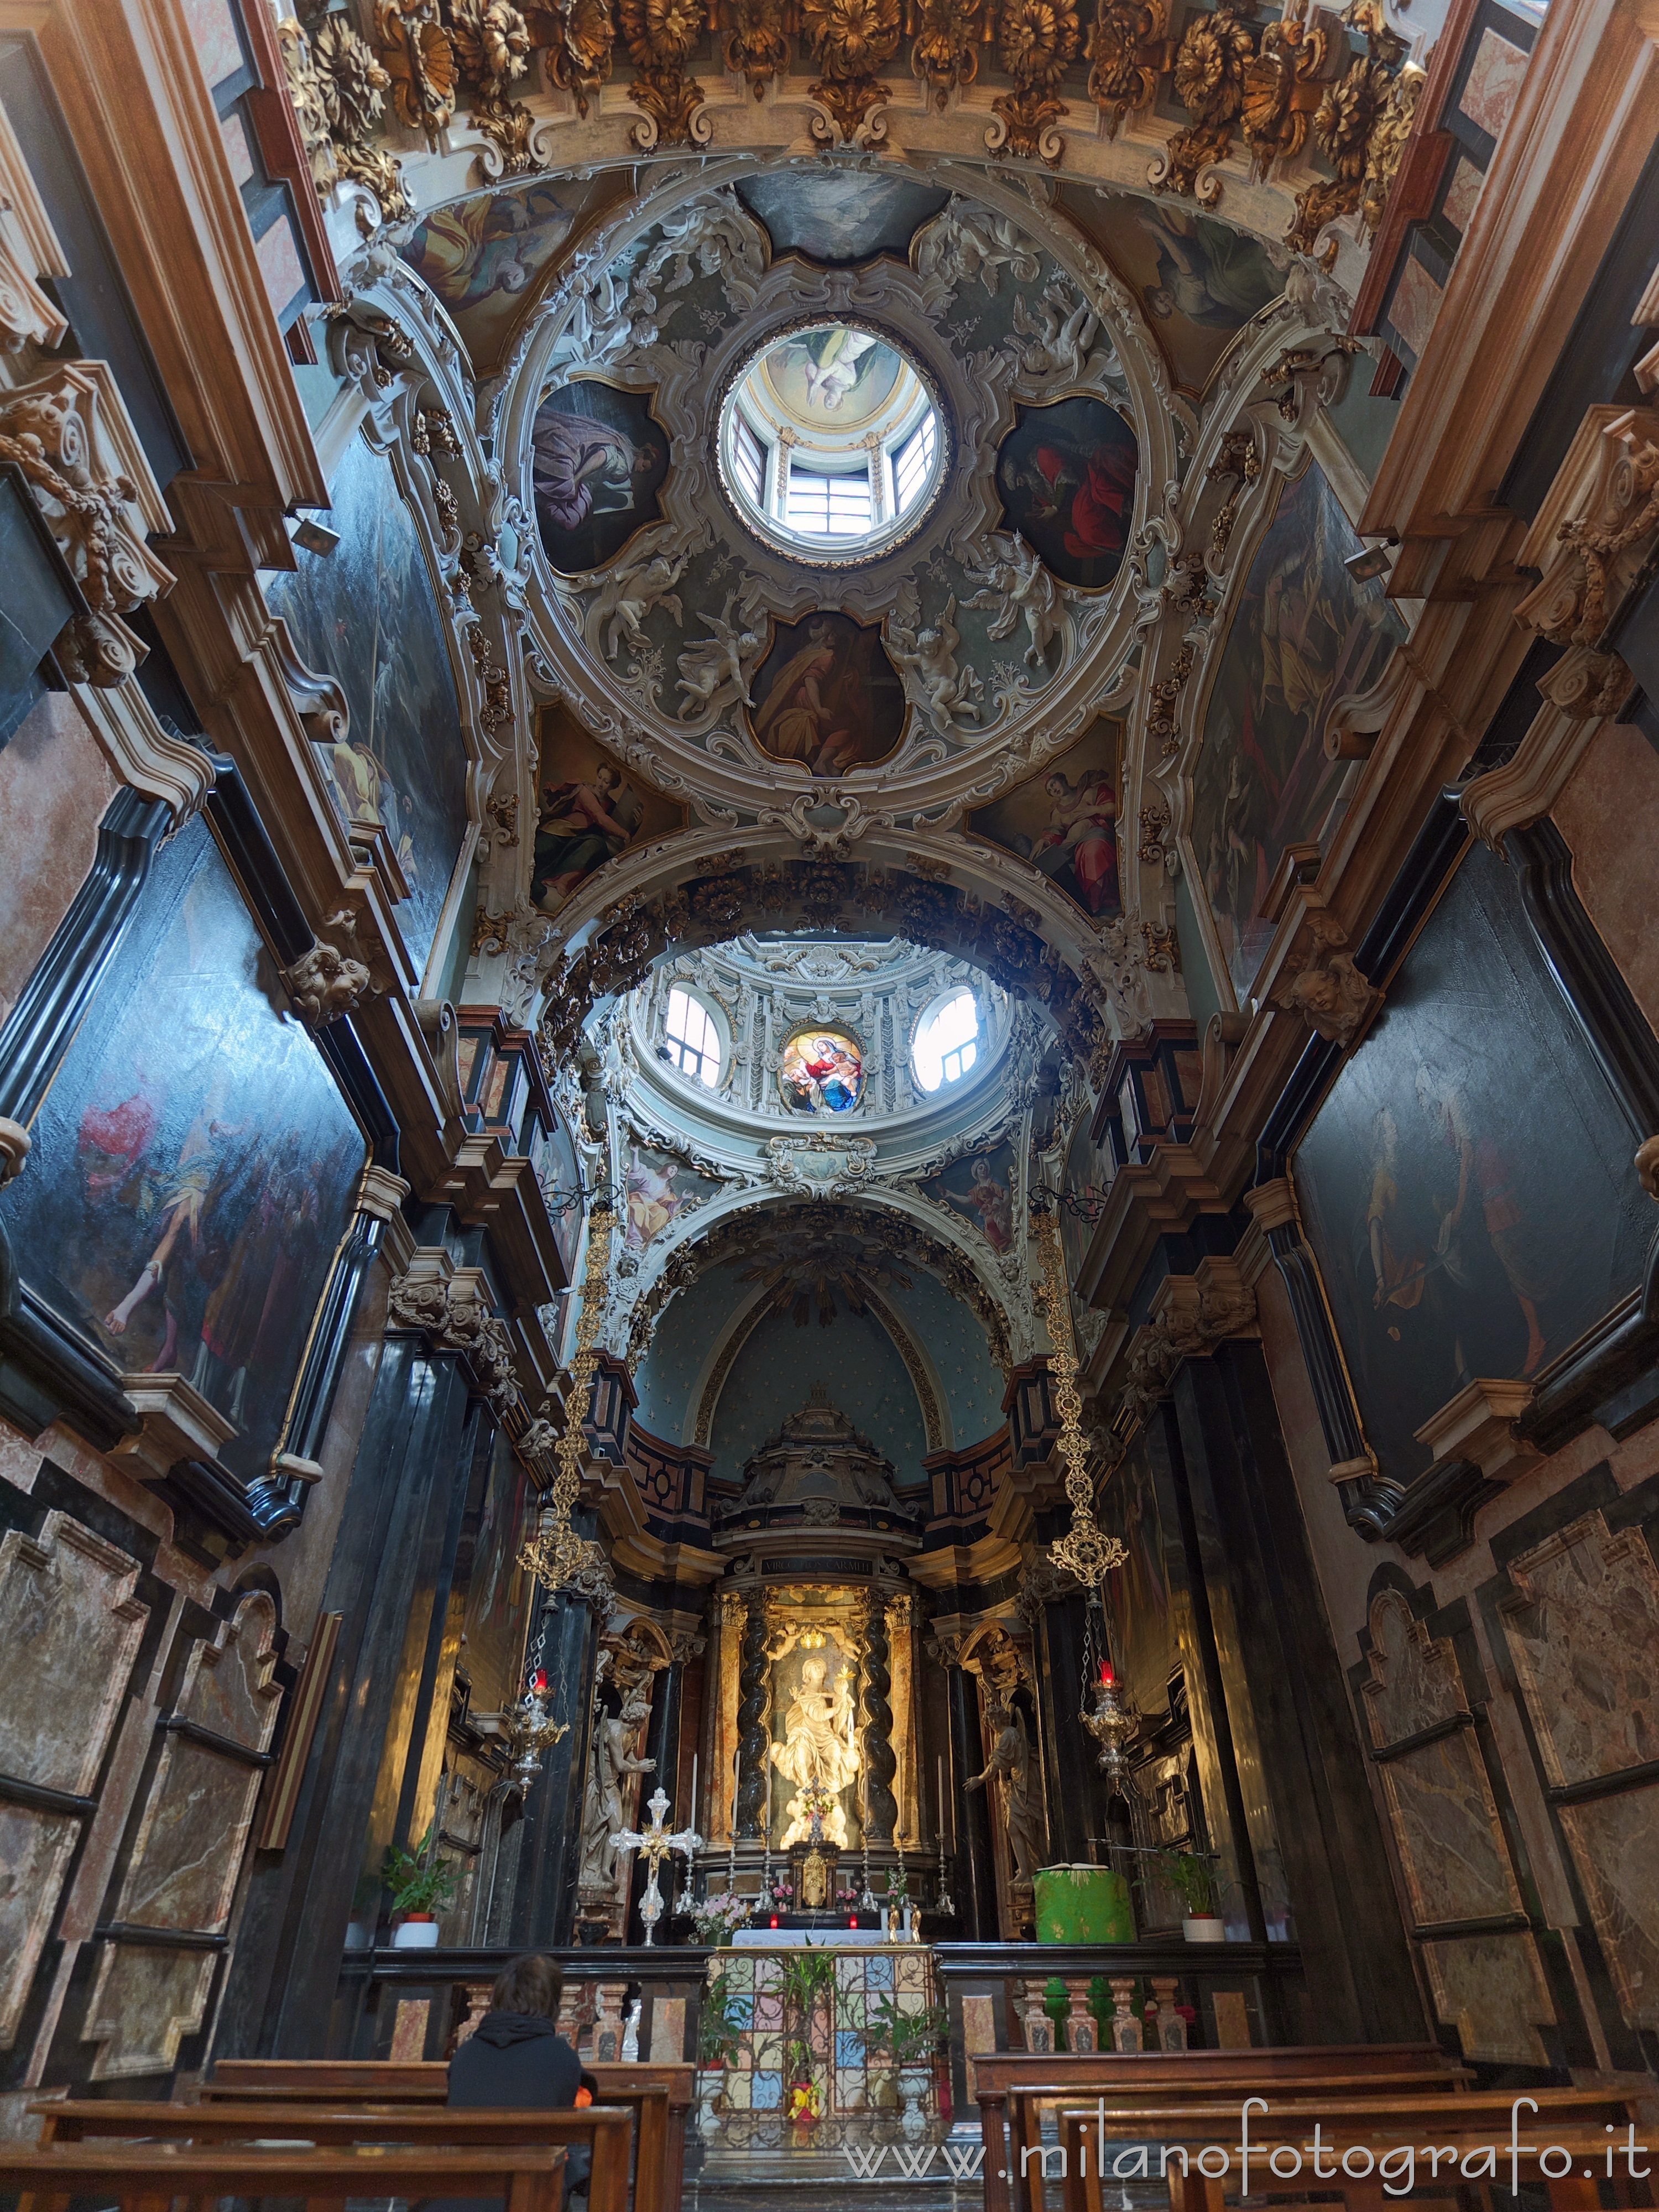 Milan (Italy): Interior of the Chapel of the Carmine Virgin in the Church of Santa Maria del Carmine - Milan (Italy)